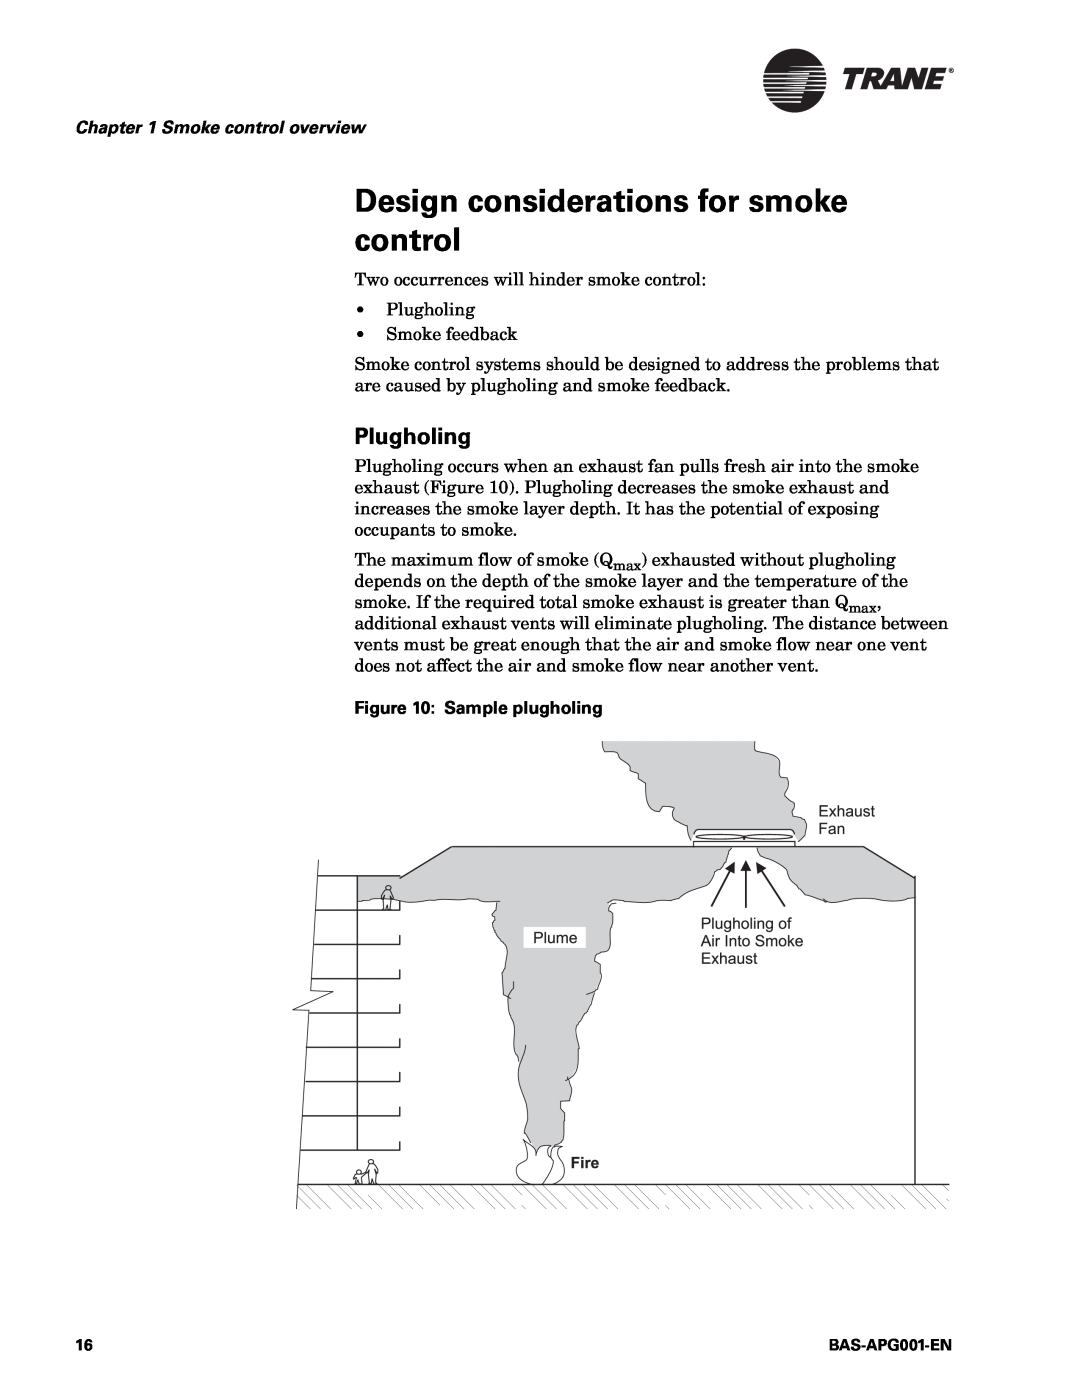 Trane BAS-APG001-EN manual Design considerations for smoke control, Plugholing, Smoke control overview 